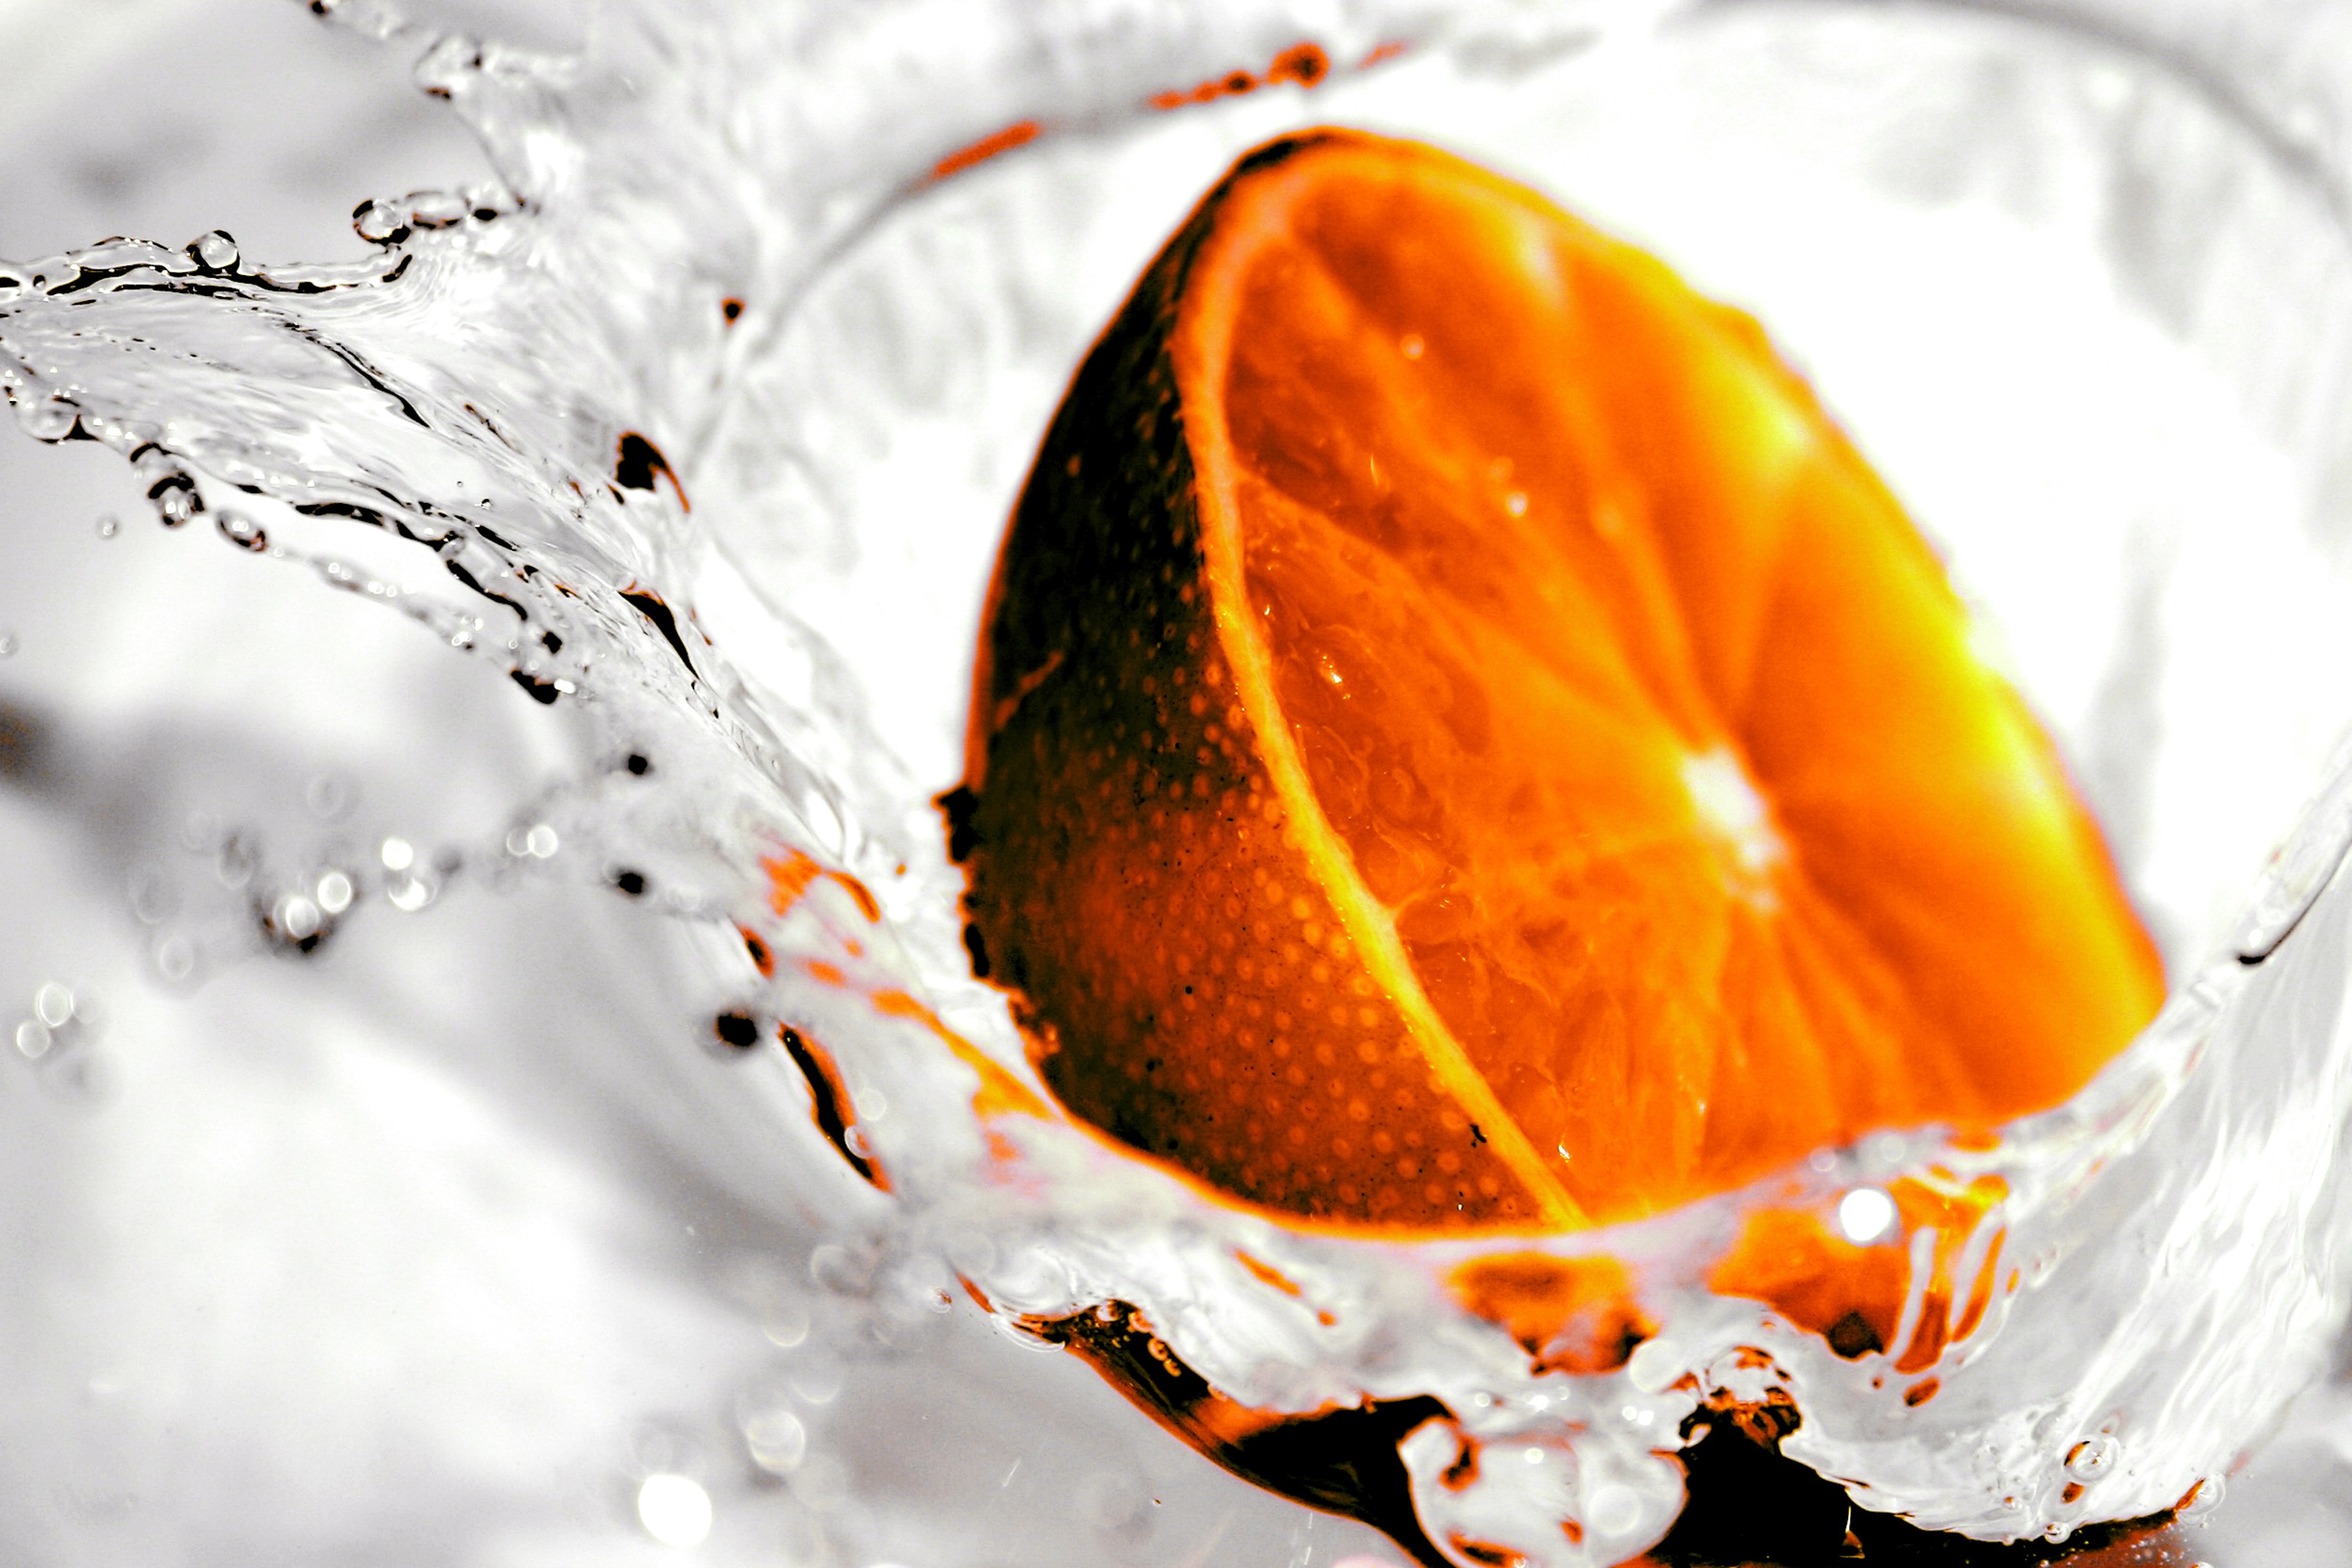 General 3072x2048 liquid water fruit food closeup orange (fruit)